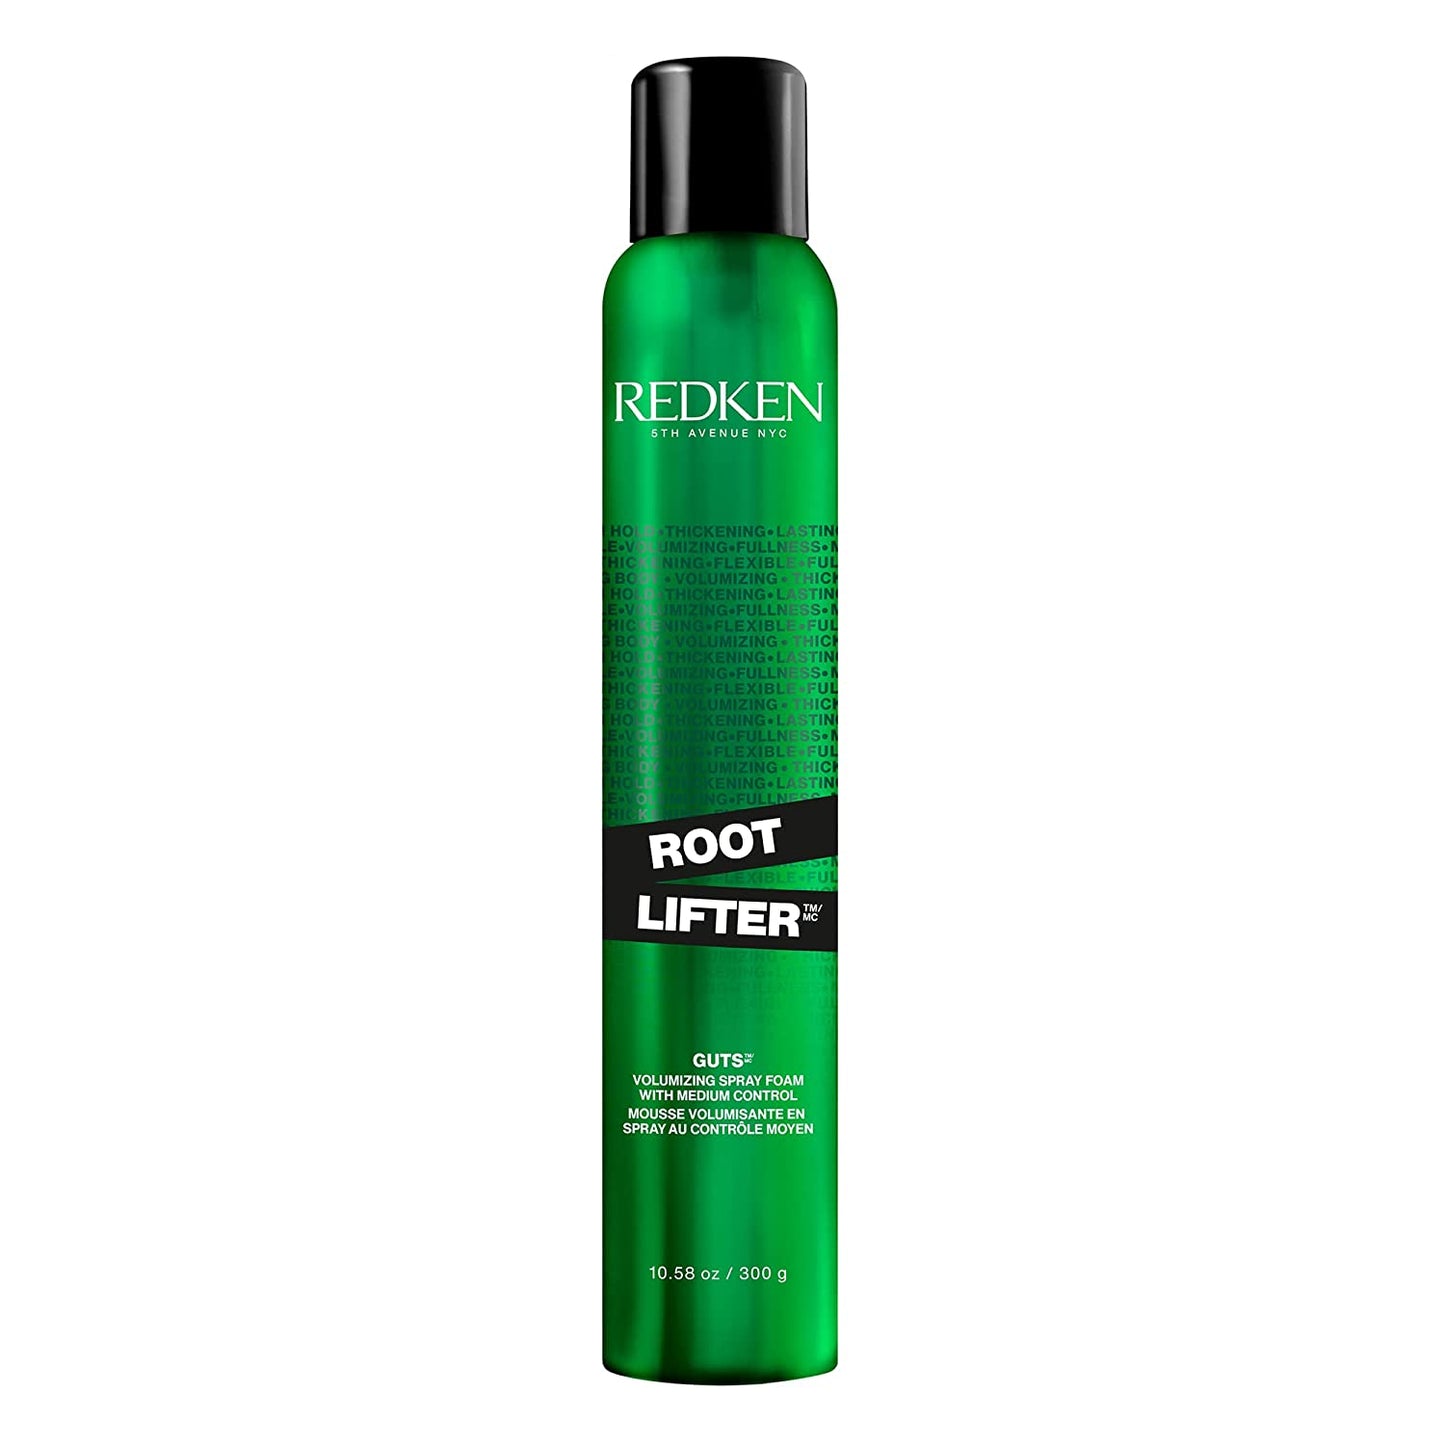 Redken 5th Avenue Nyc Root Lifter Guts Volumizing Spray Foam With Medium Control 10.68oz / 300g